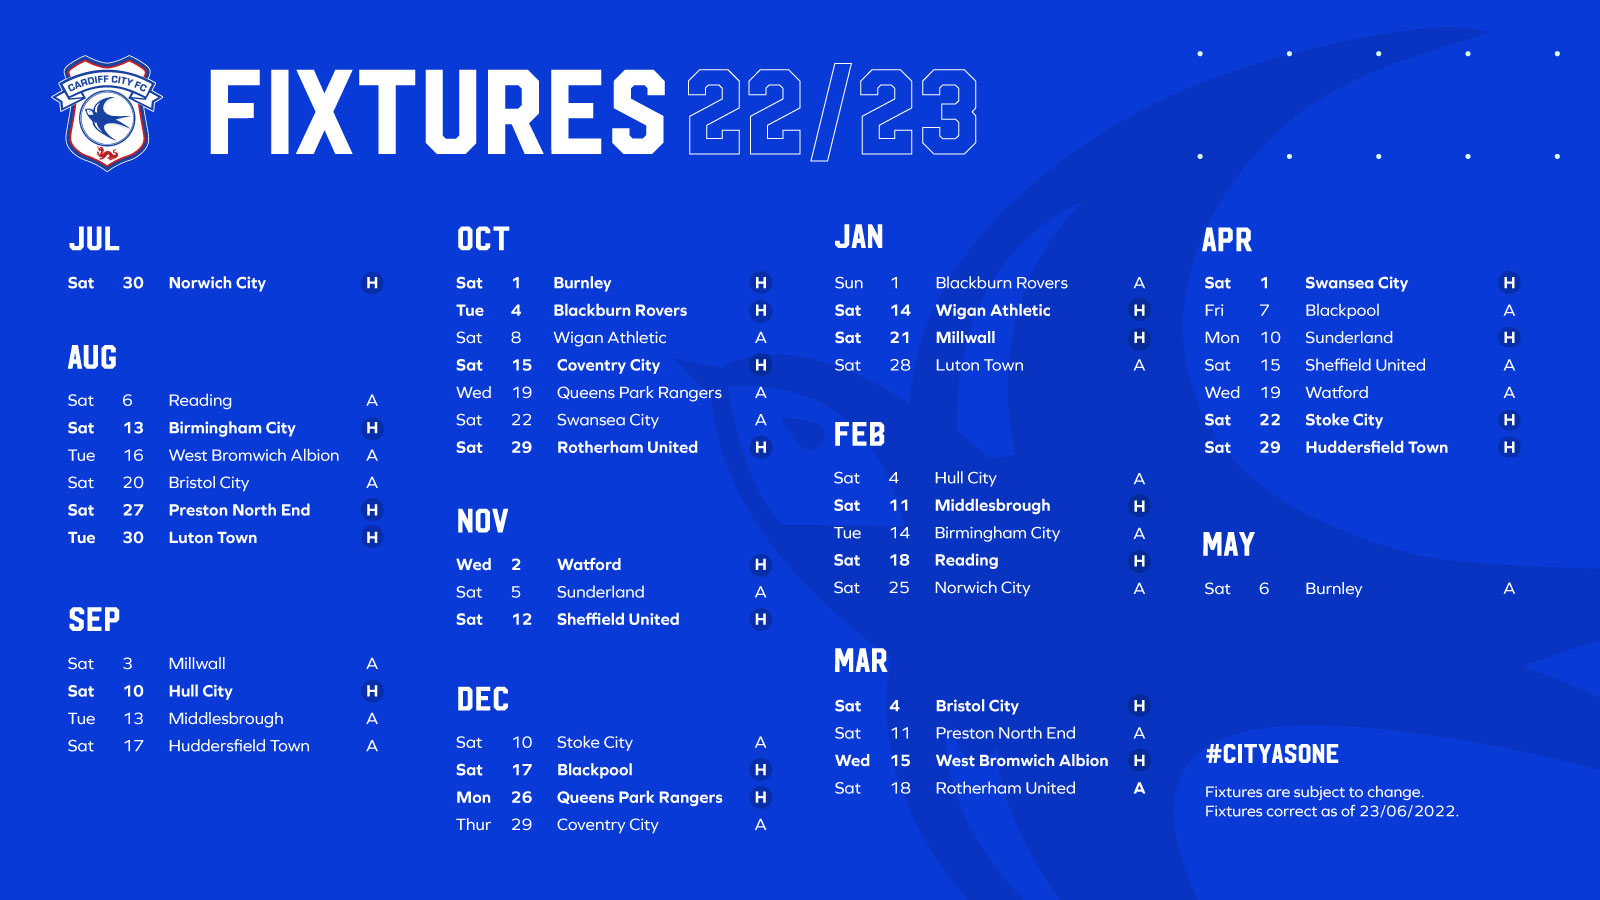 Our 2022/23 fixture list...